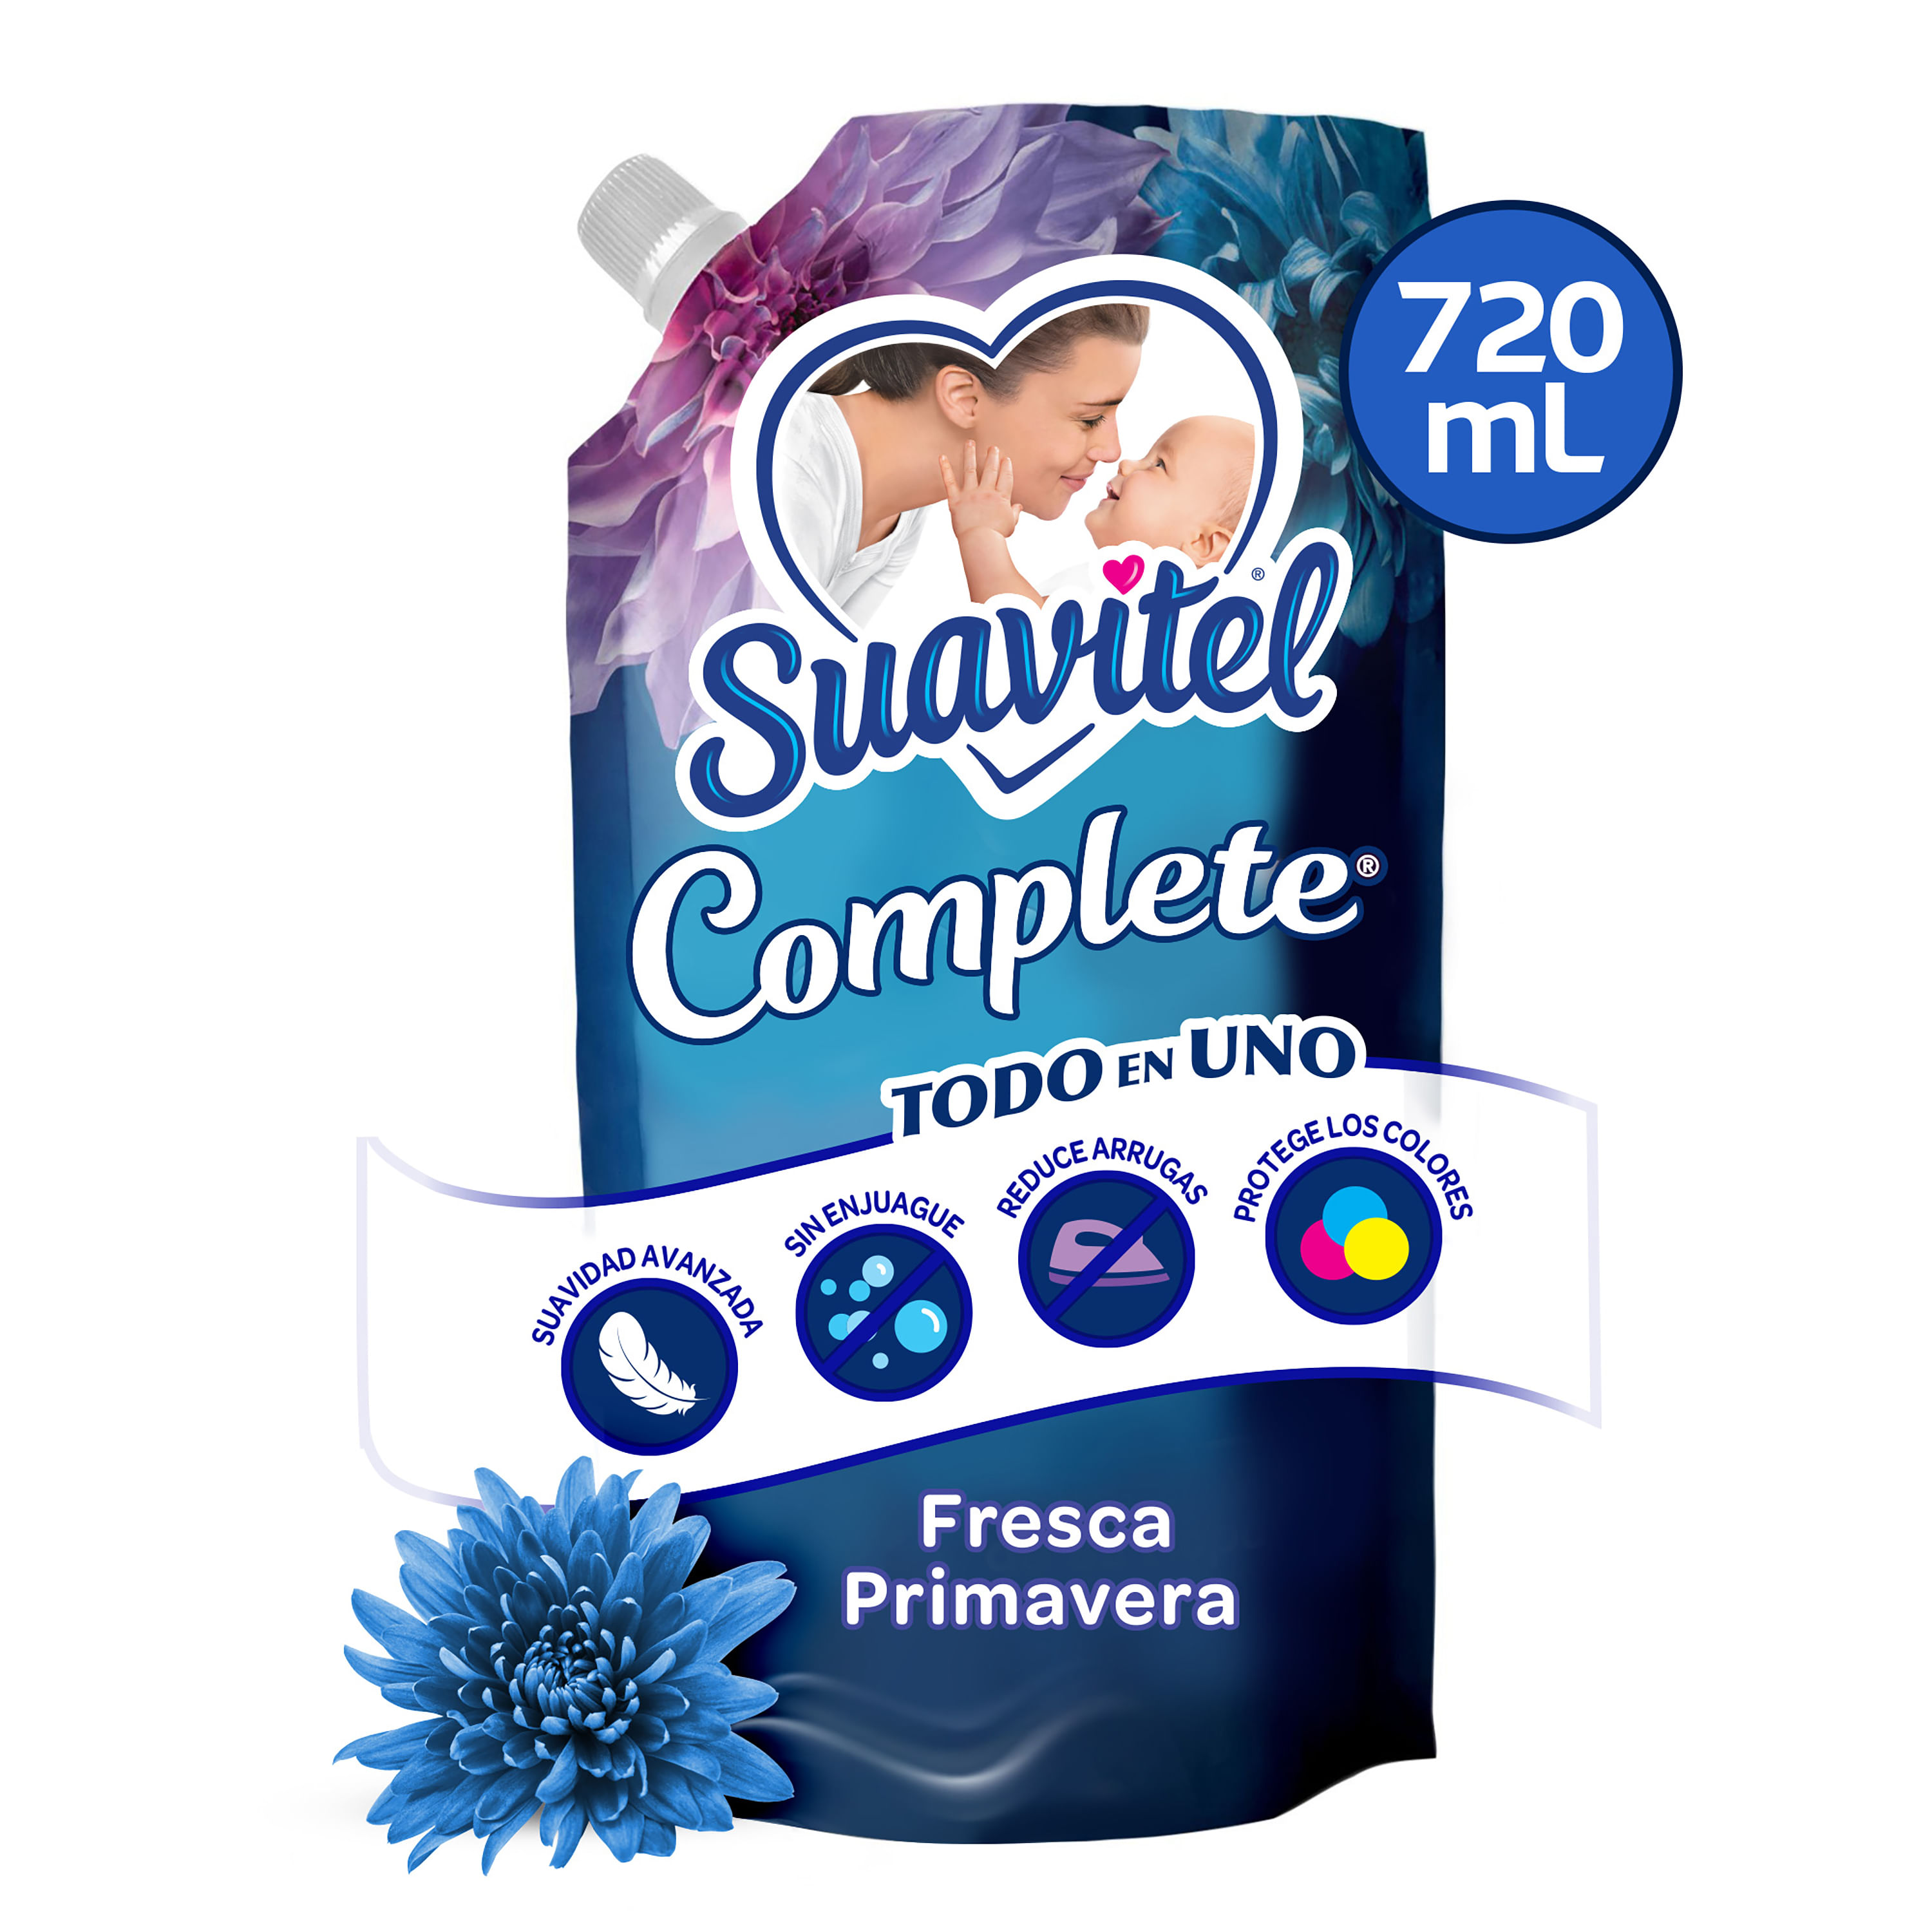 Suavizante-de-Telas-Suavitel-Complete-Fresca-Primavera-Doypack-720ml-1-475